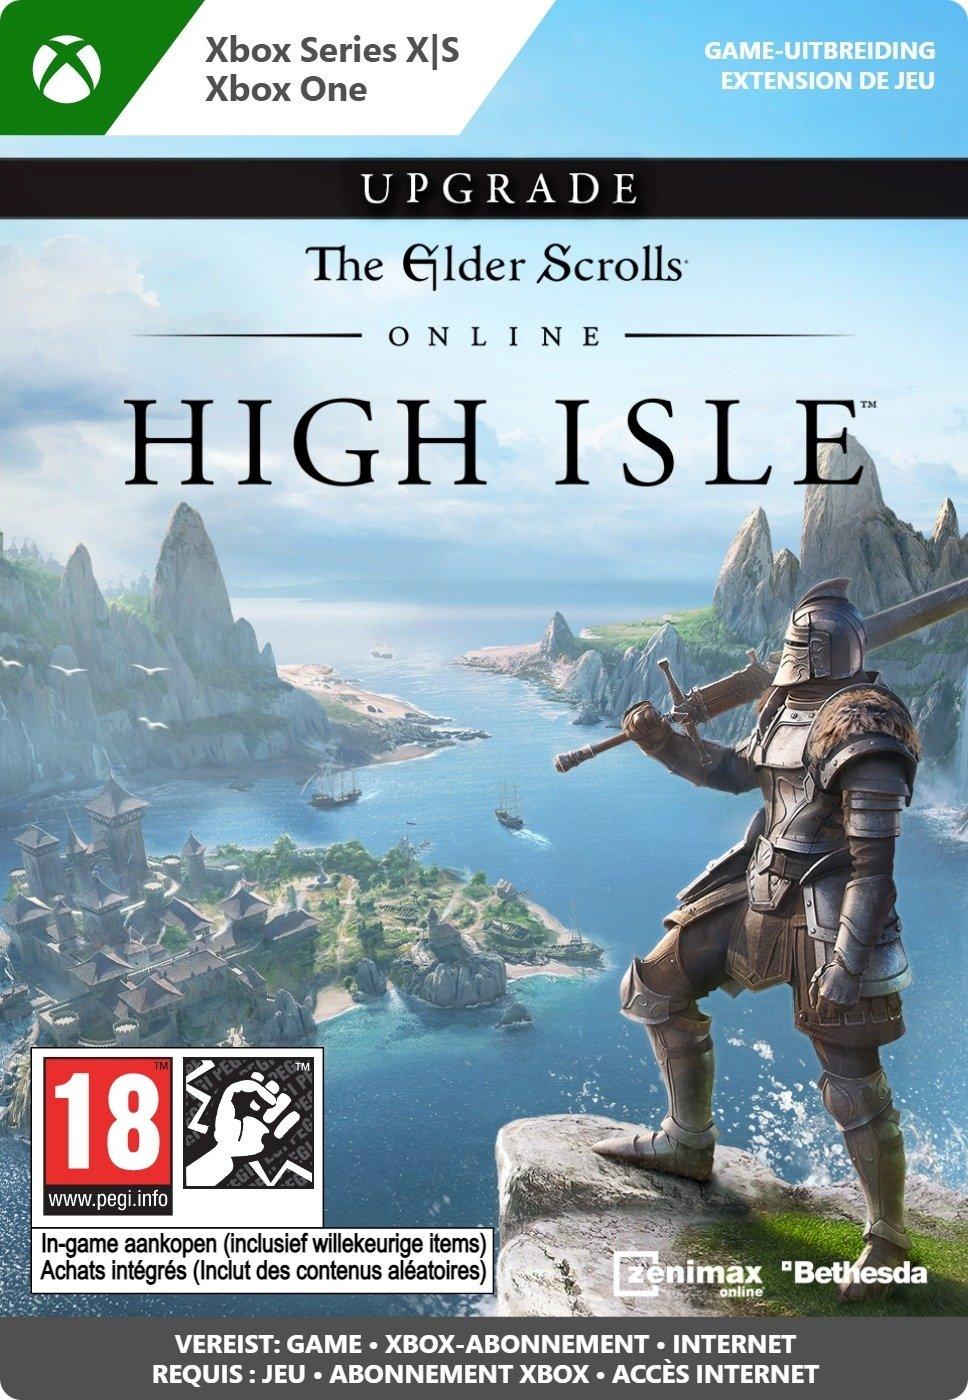 The Elder Scrolls Online: High Isle Upgrade - Xbox Series X/Xbox One - Add-on | 7CN-00098 (66f1d0cb-8a00-5641-84ff-5c1de30aef22)